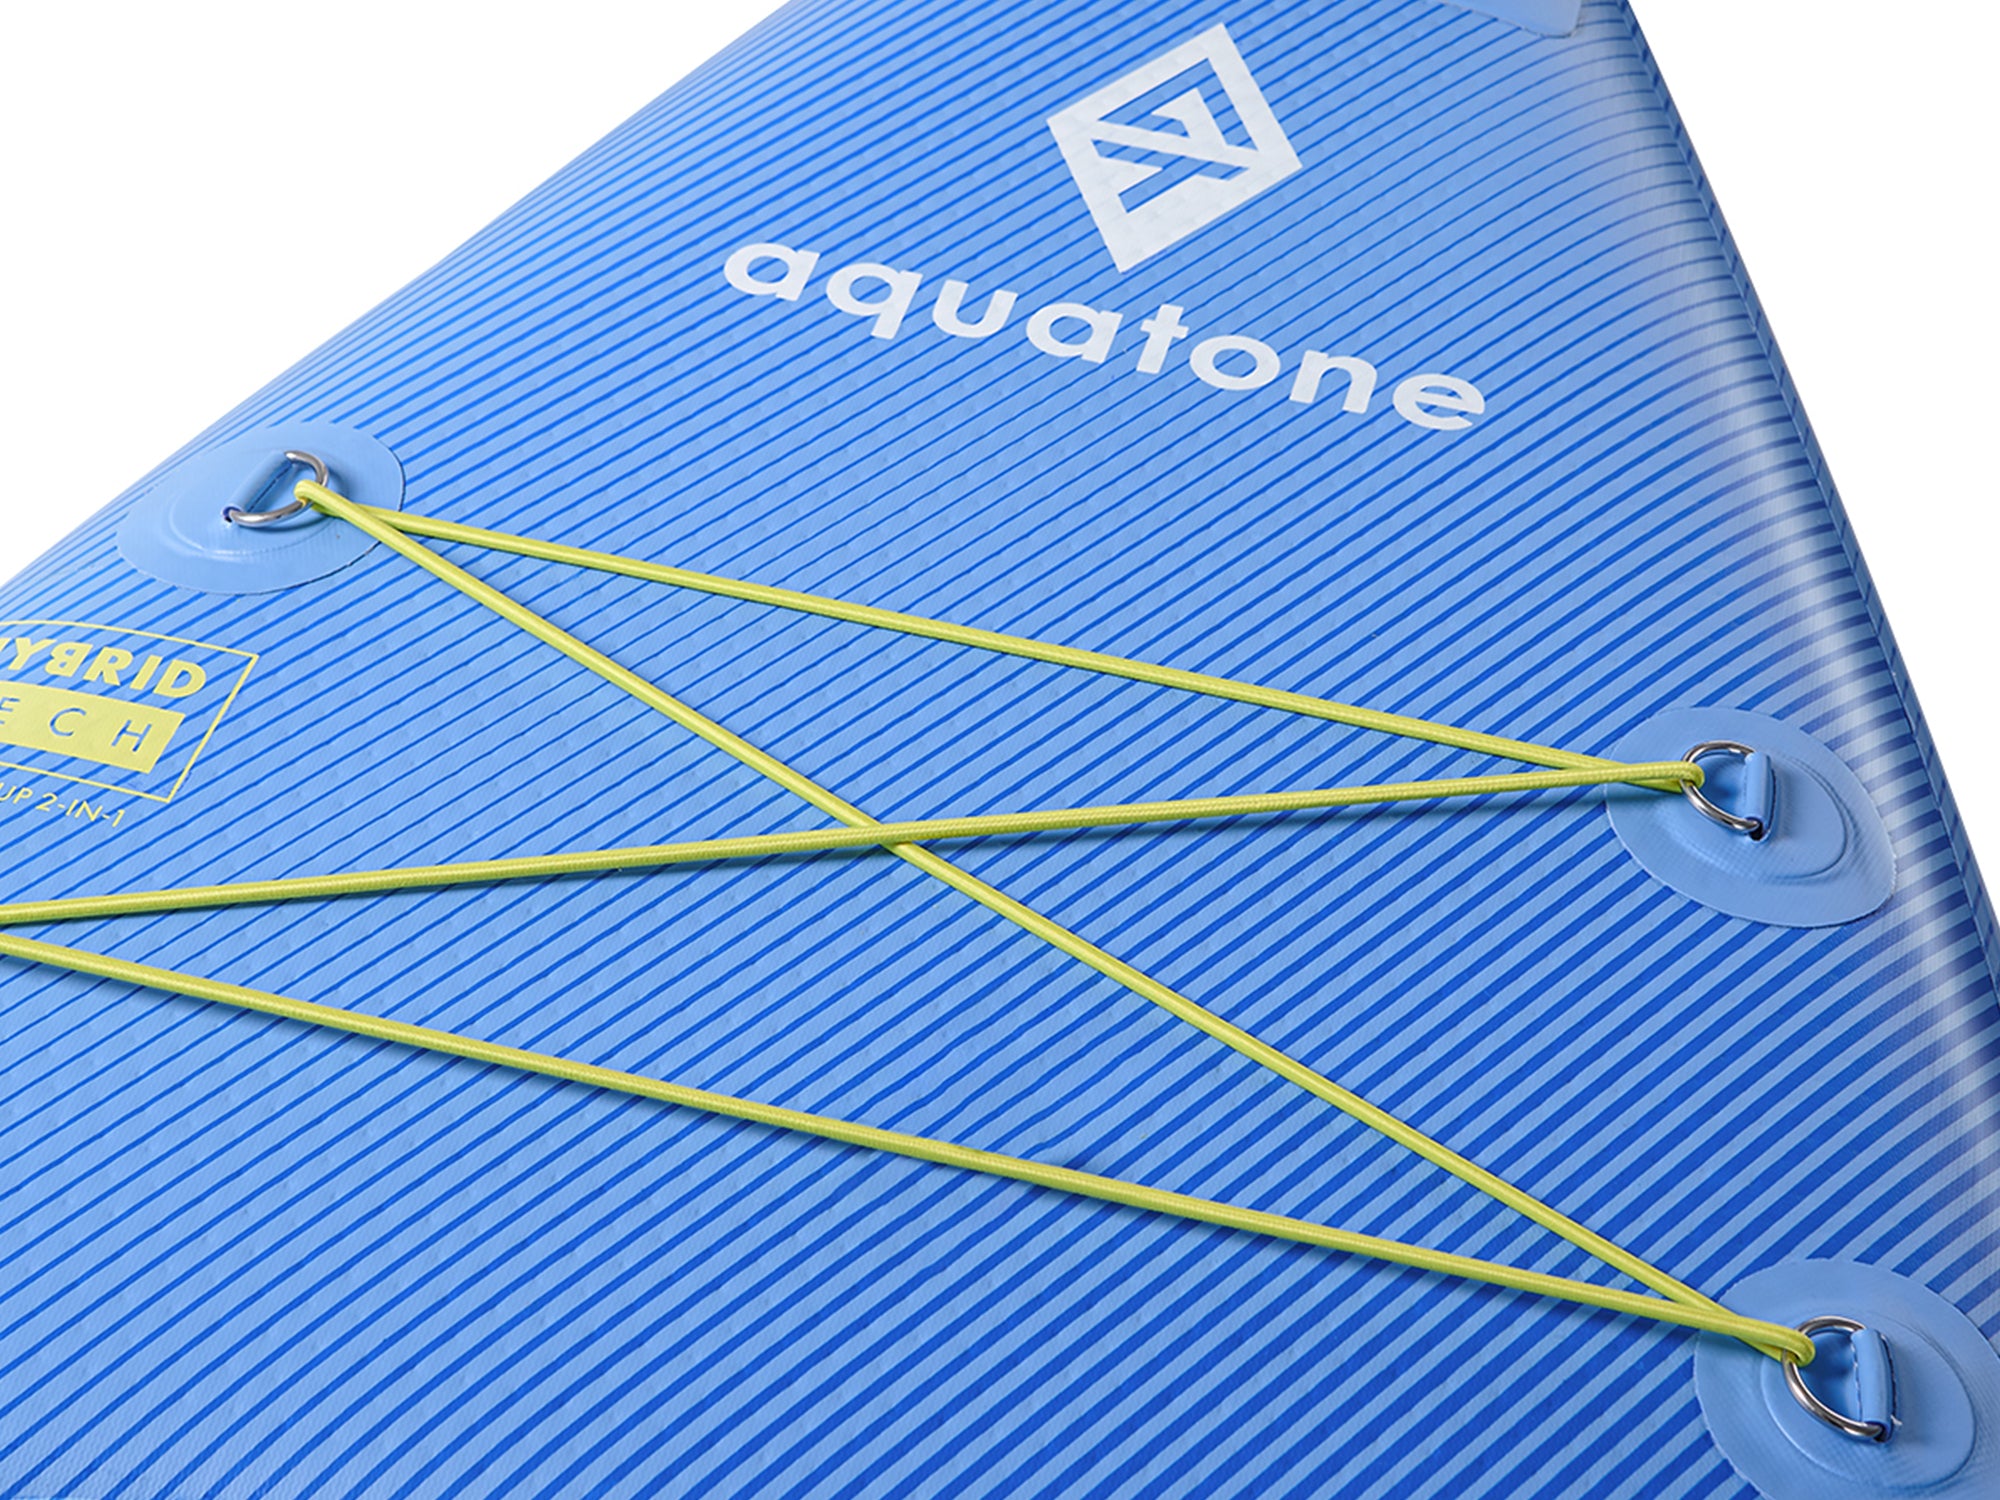 Aquatone PLAYTIME HYBRID SUP KAYAK 11'4" iSUP Set, 345x86x20cm, Volumen 400L